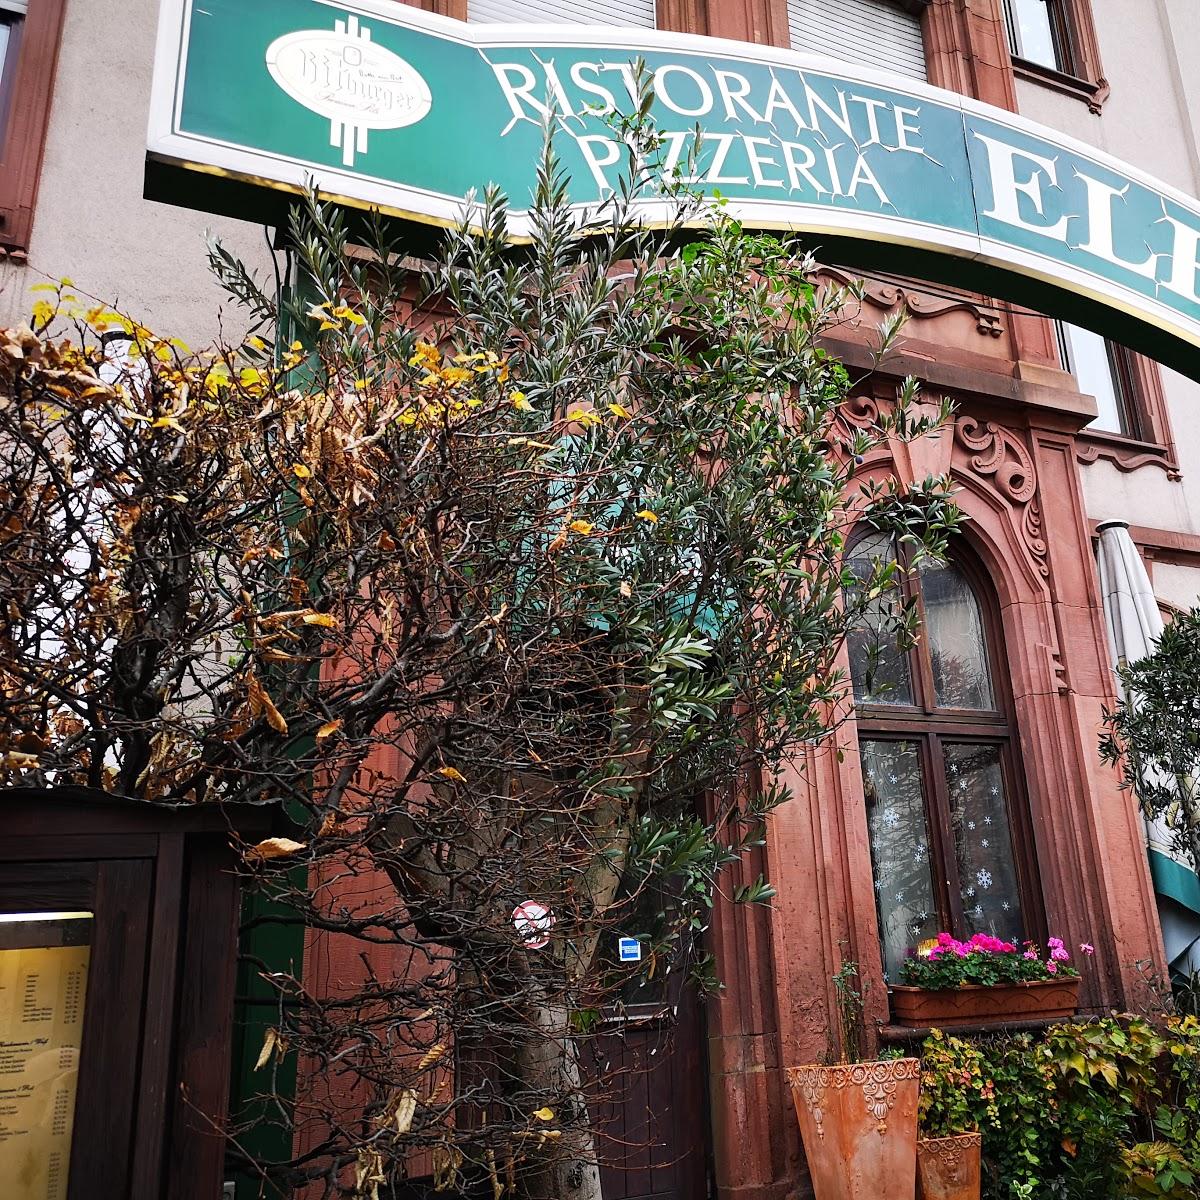 Restaurant "Ristorante u. Pizzeria Elba" in Frankfurt am Main